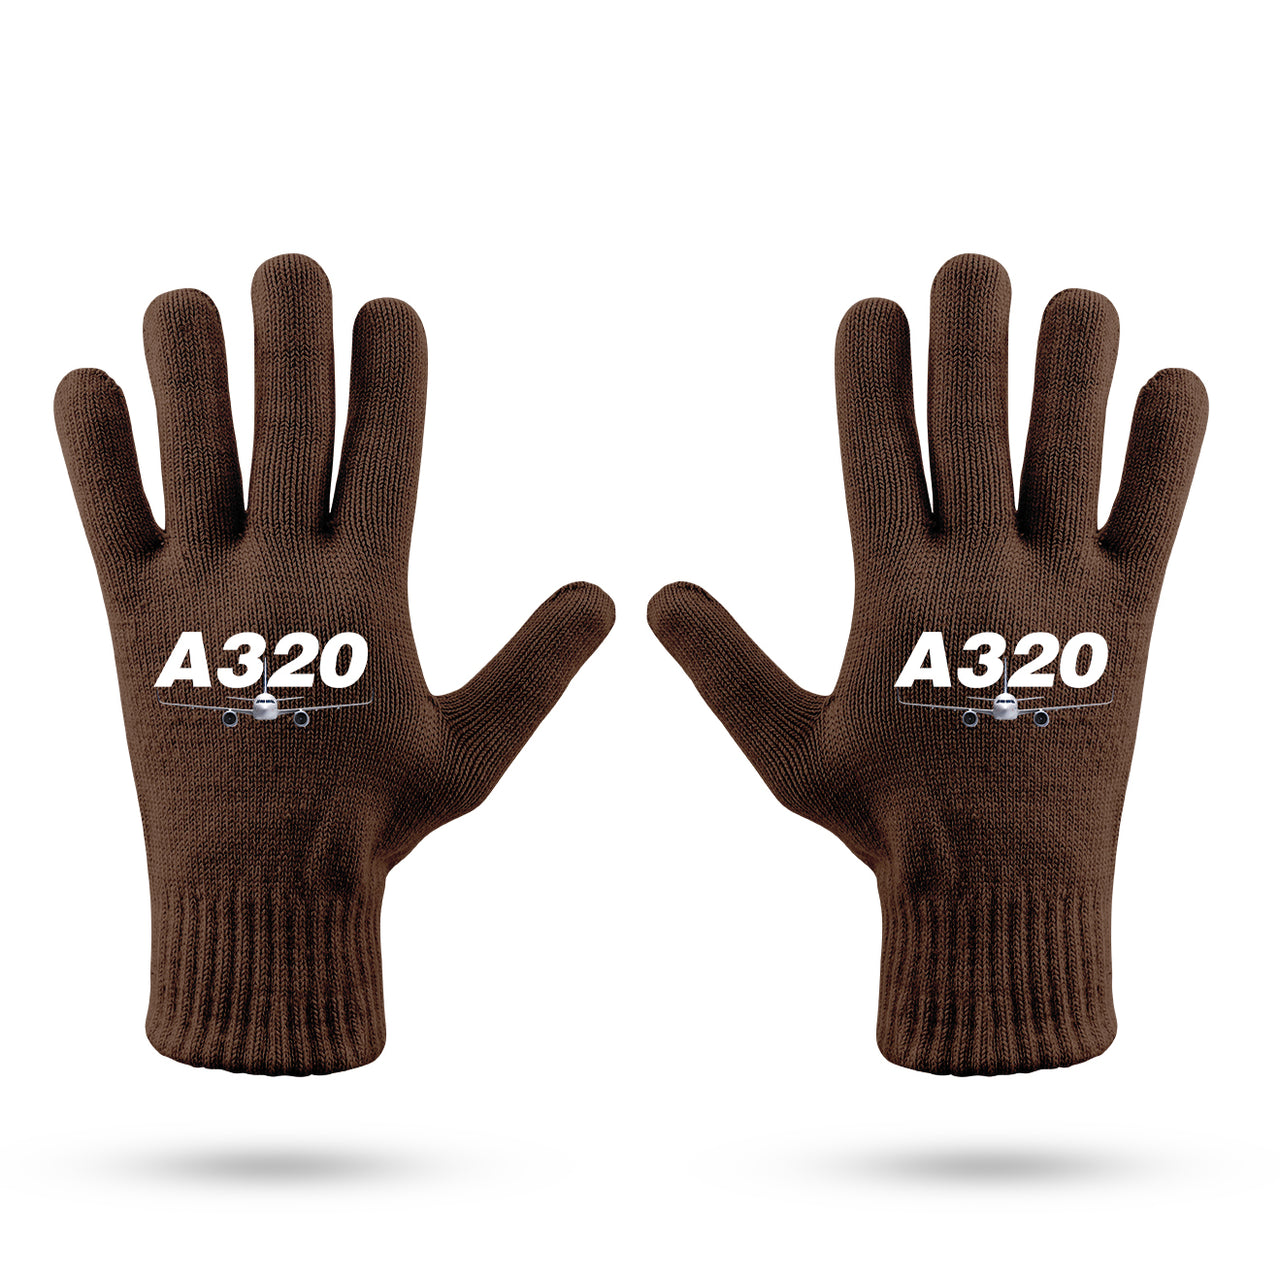 Super Airbus A320 Designed Gloves